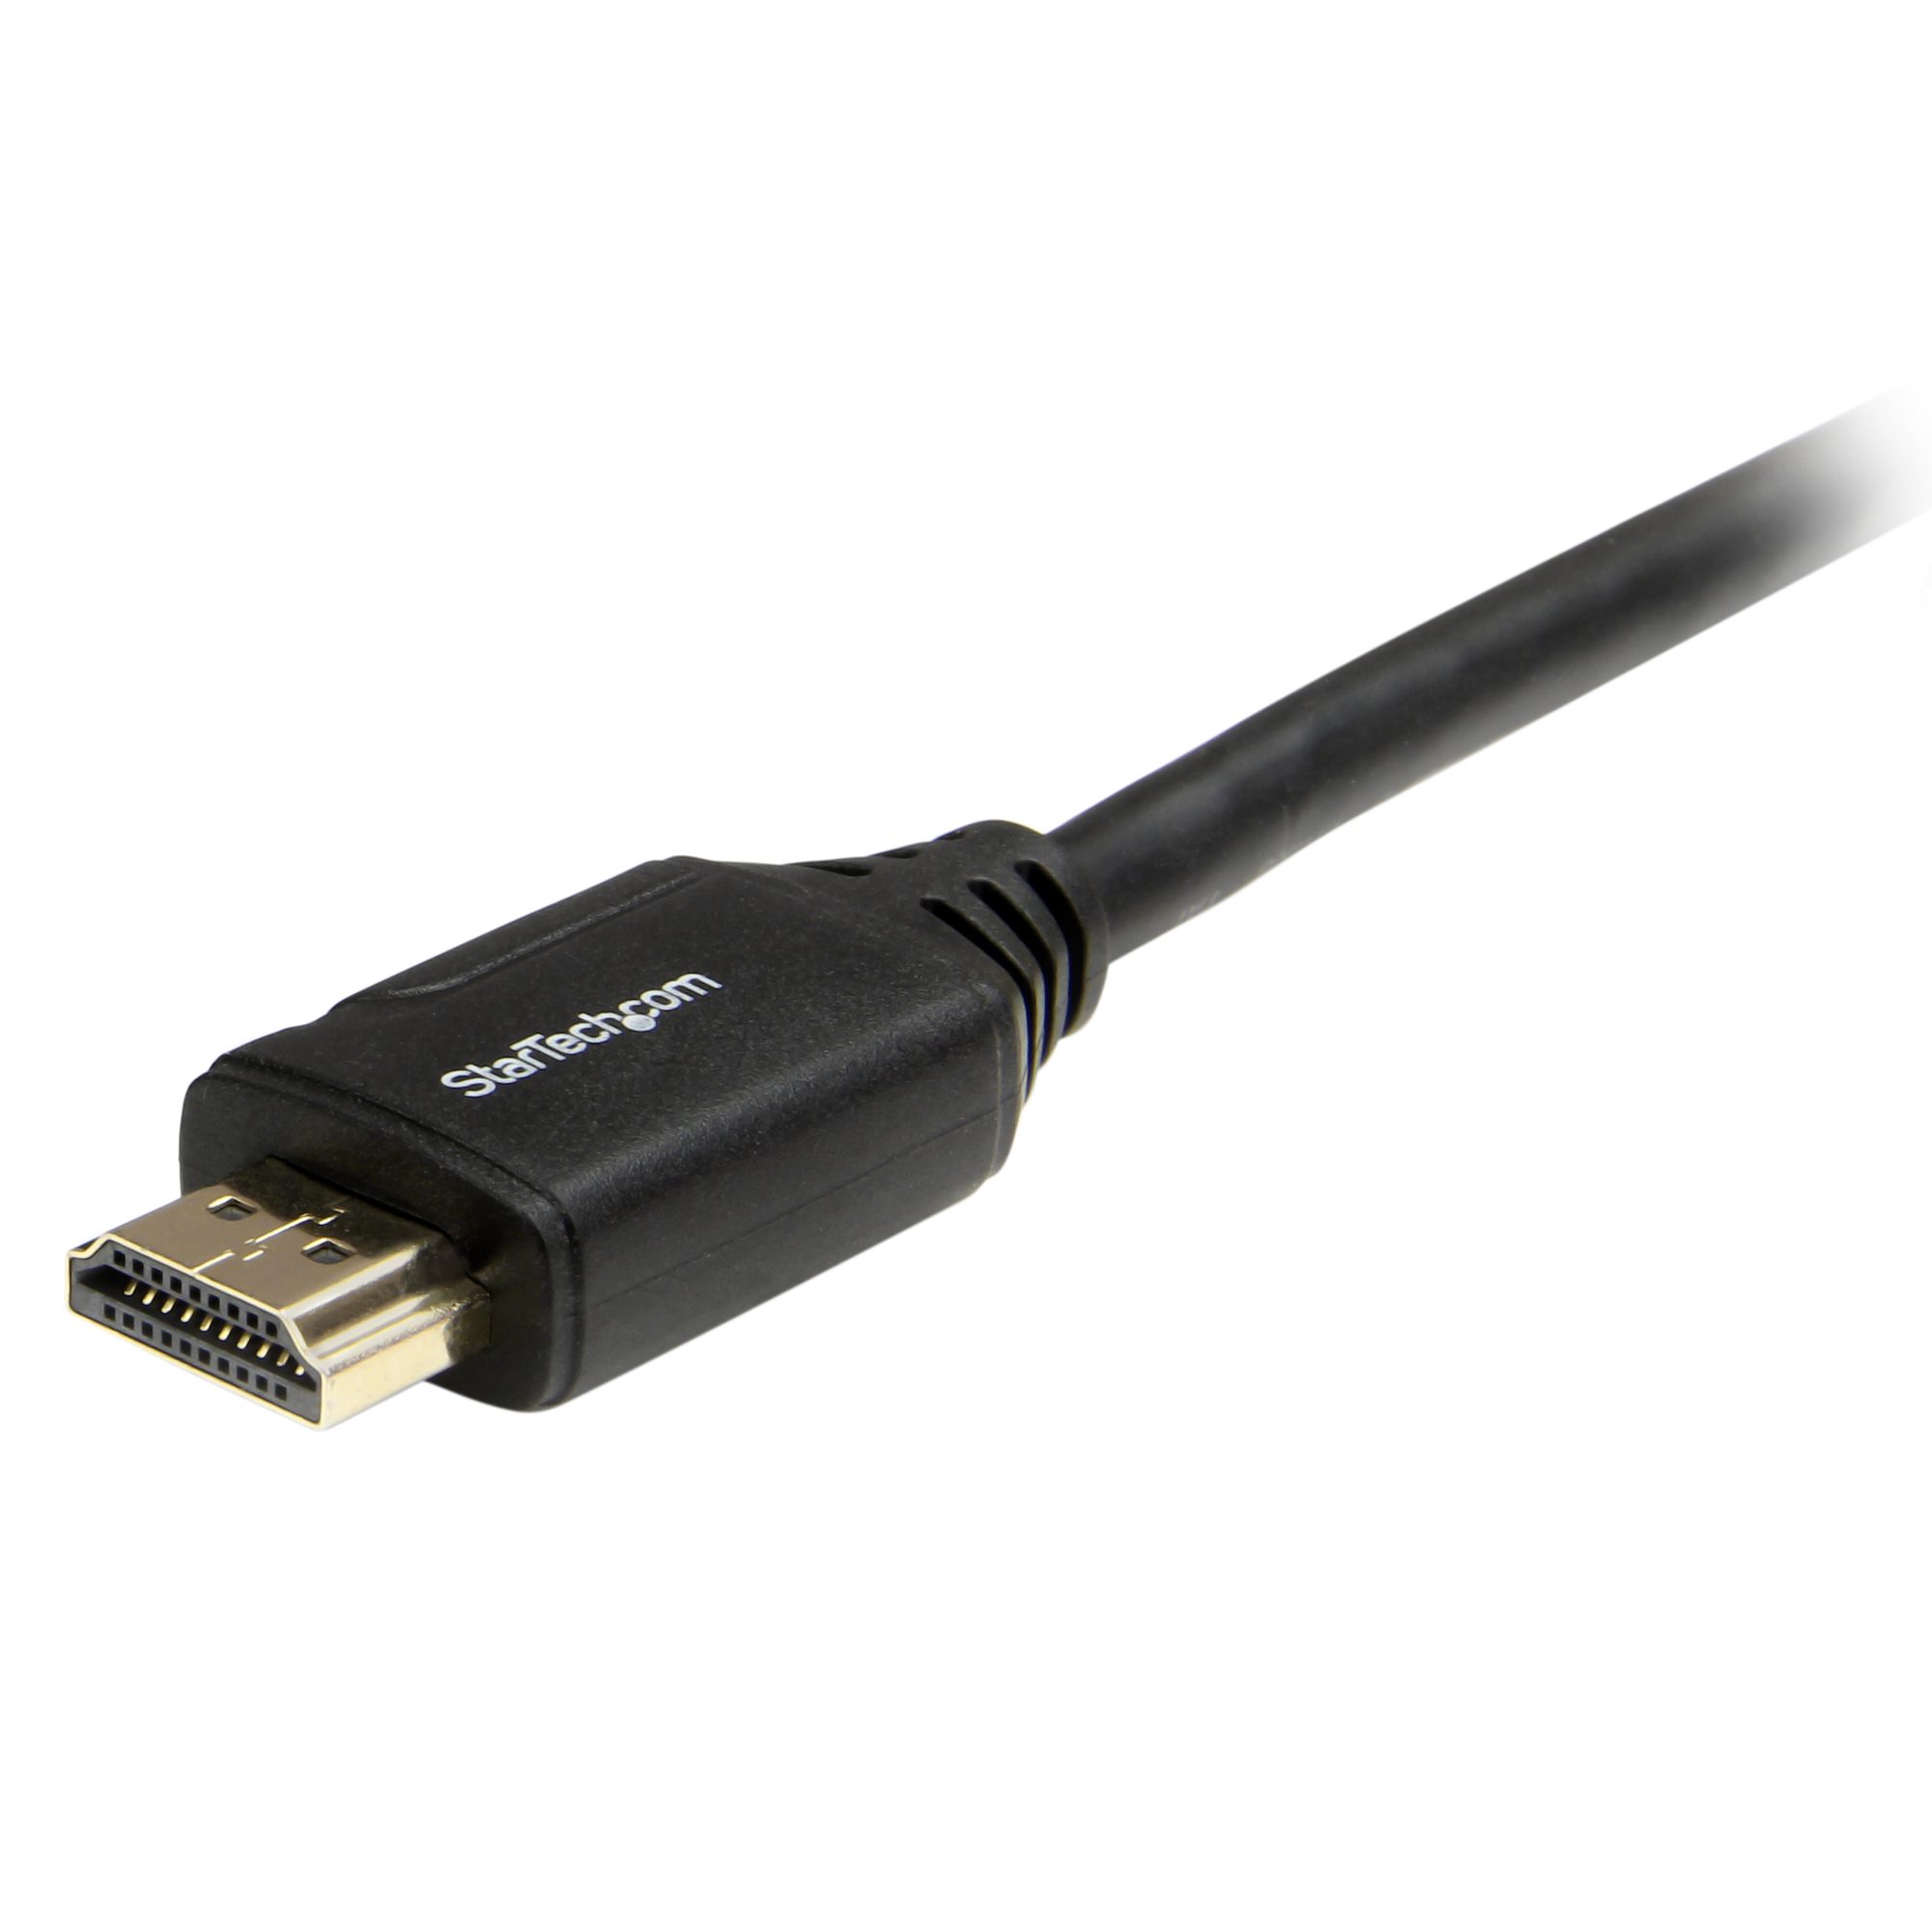 Tap Skinne bureau 2m High Speed HDMI Cable - Premium Cord - HDMI® Cables & HDMI Adapters |  StarTech.com